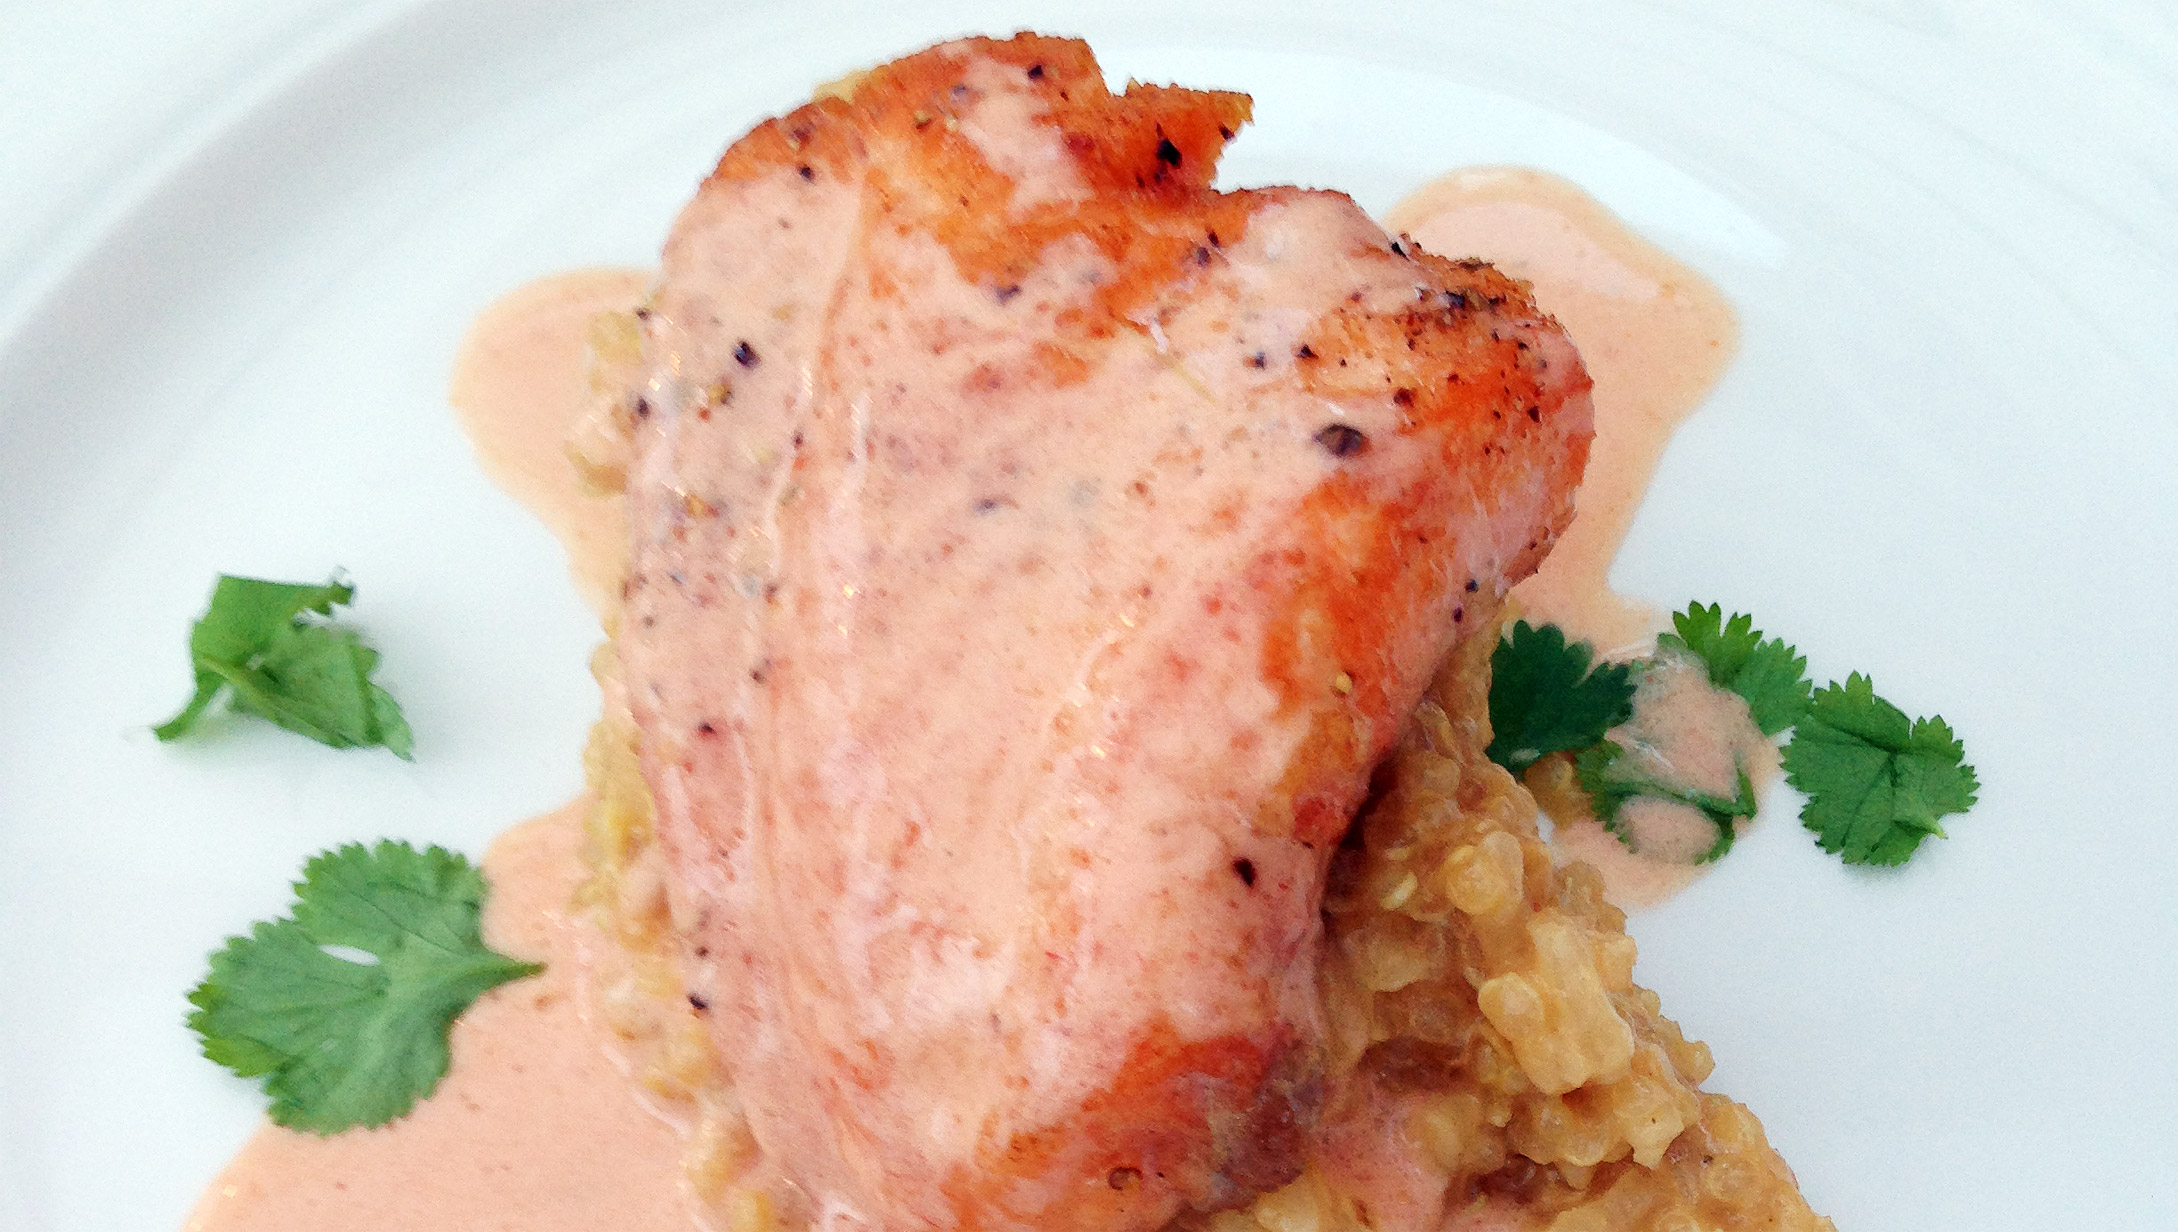 Salmon with Prawn Sauce on Quinoa